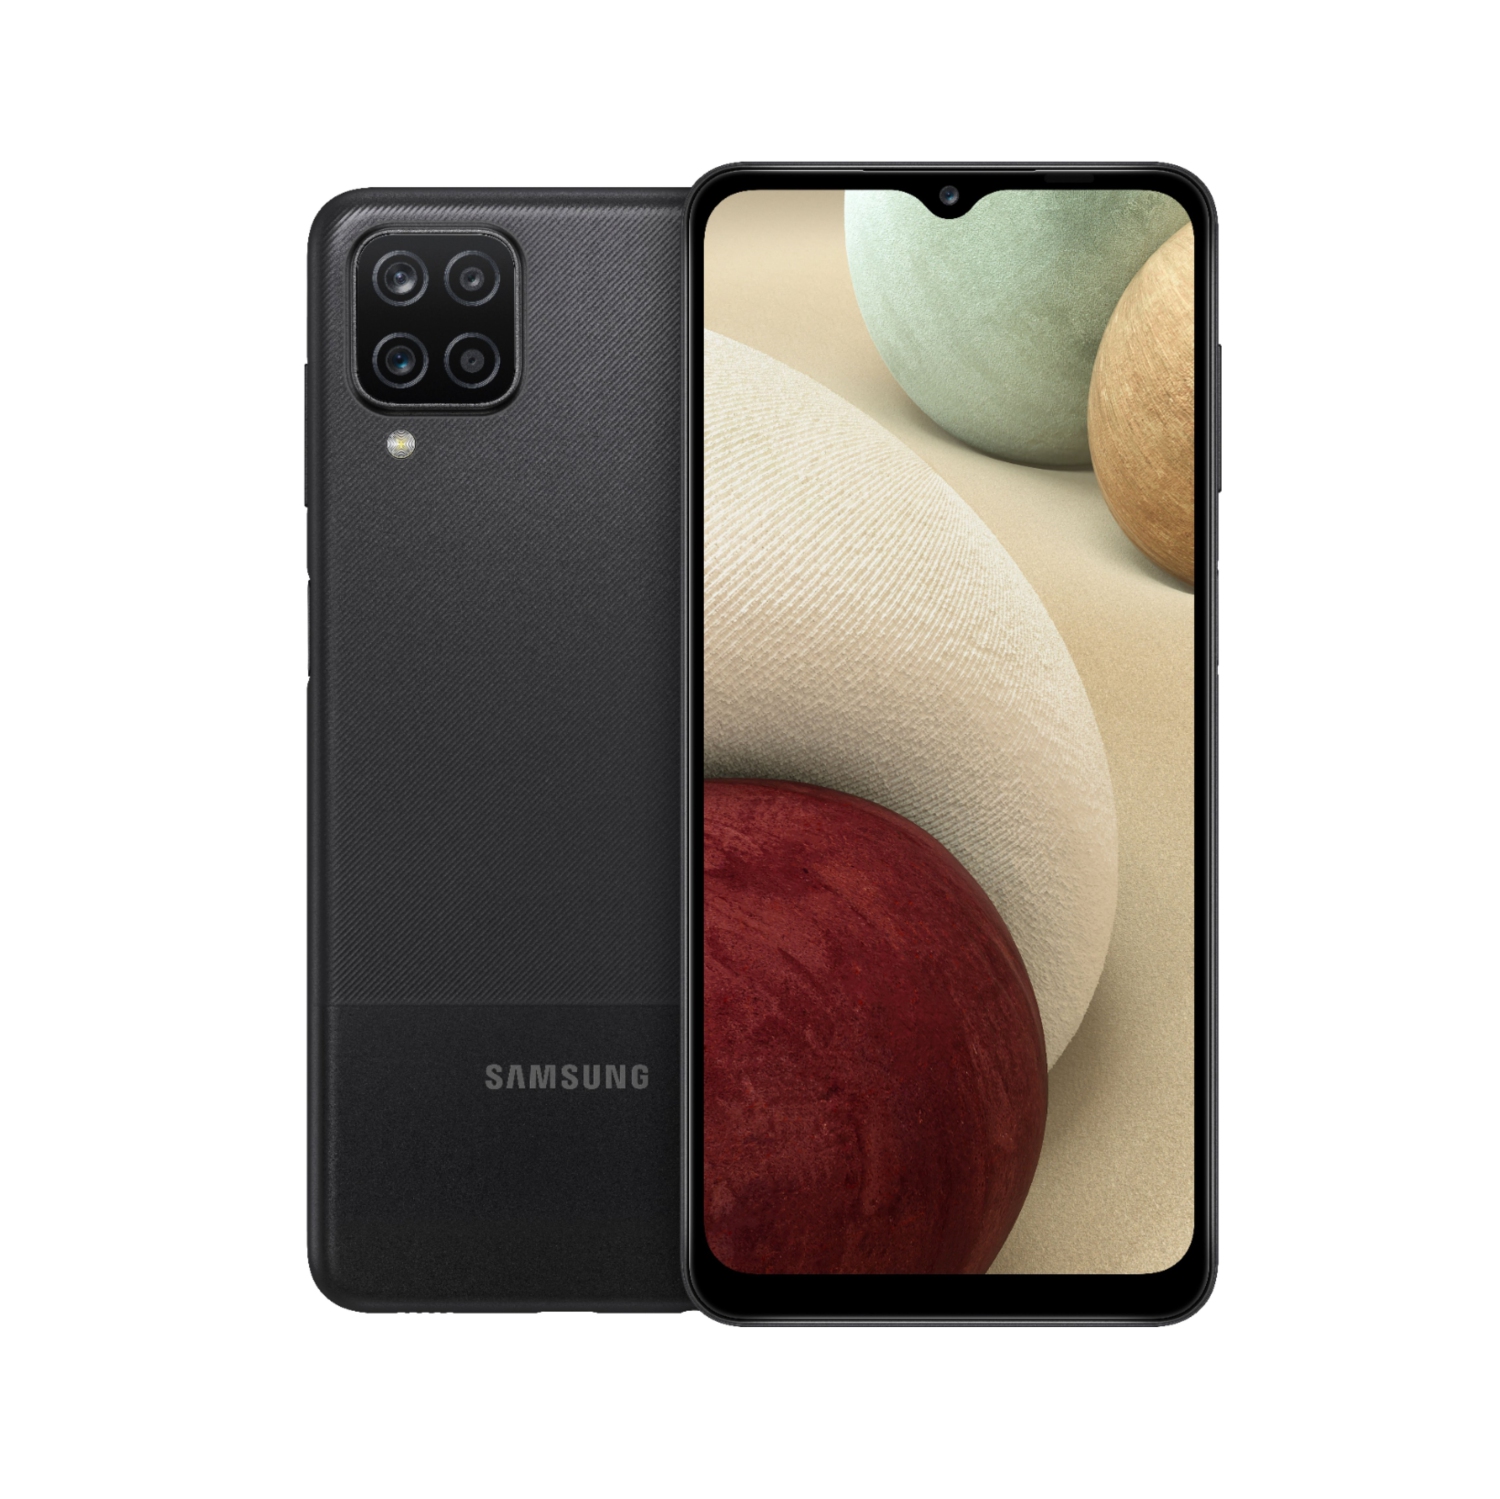 Samsung Galaxy A12 32GB Smartphone (Unlocked) - Black - Open Box - Never Used - US Version